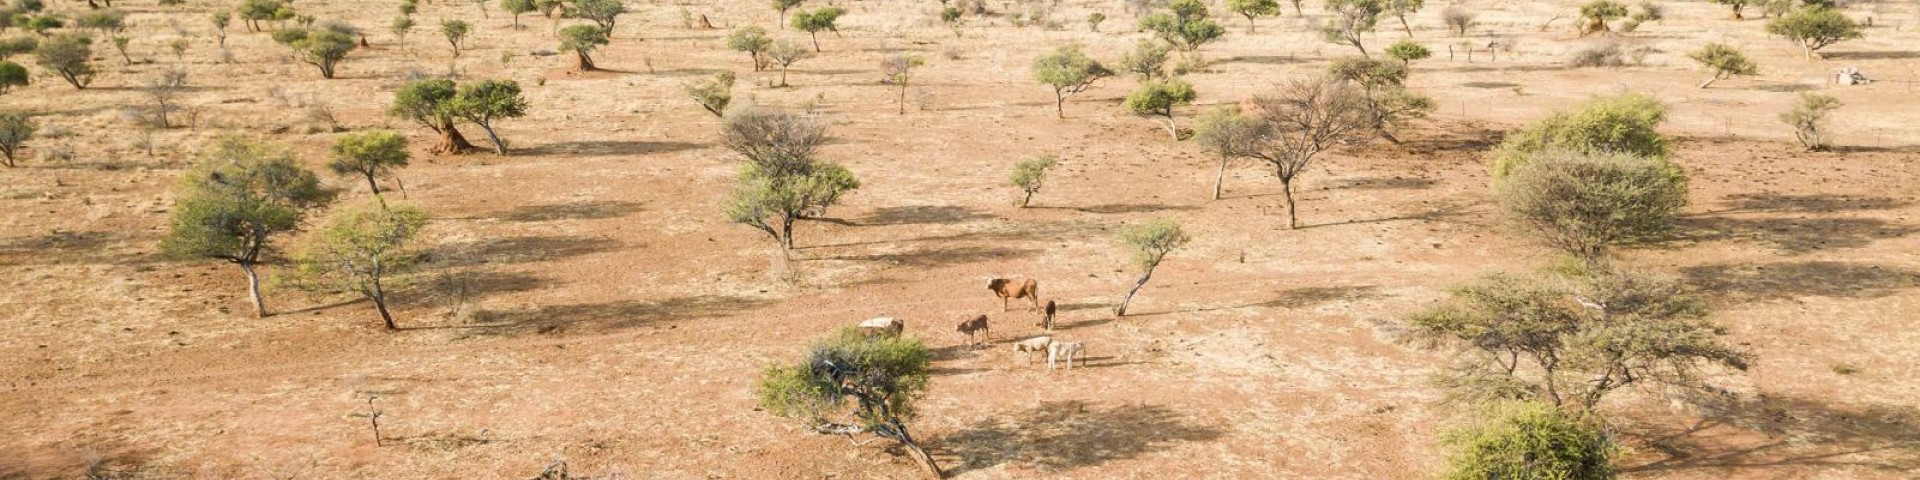 Farm animals graze on a barren landscape.